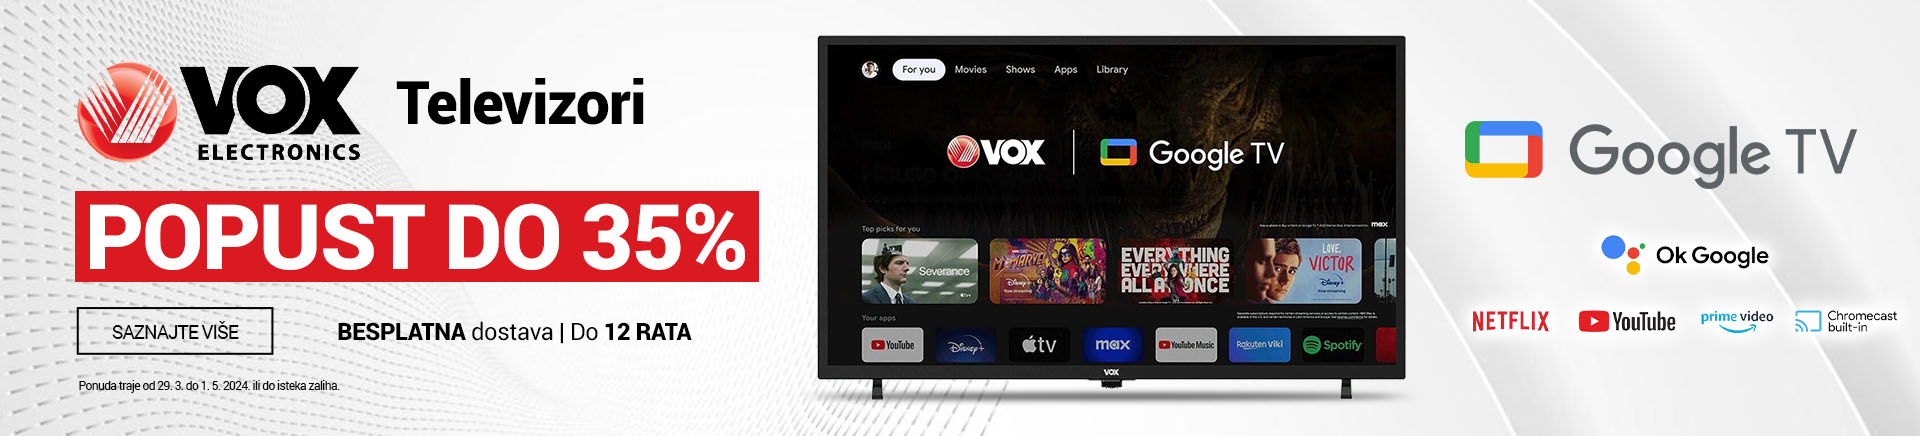 RS VOX TV Televizori GoogleTV 35posto MOBILE 380 X 436.jpg